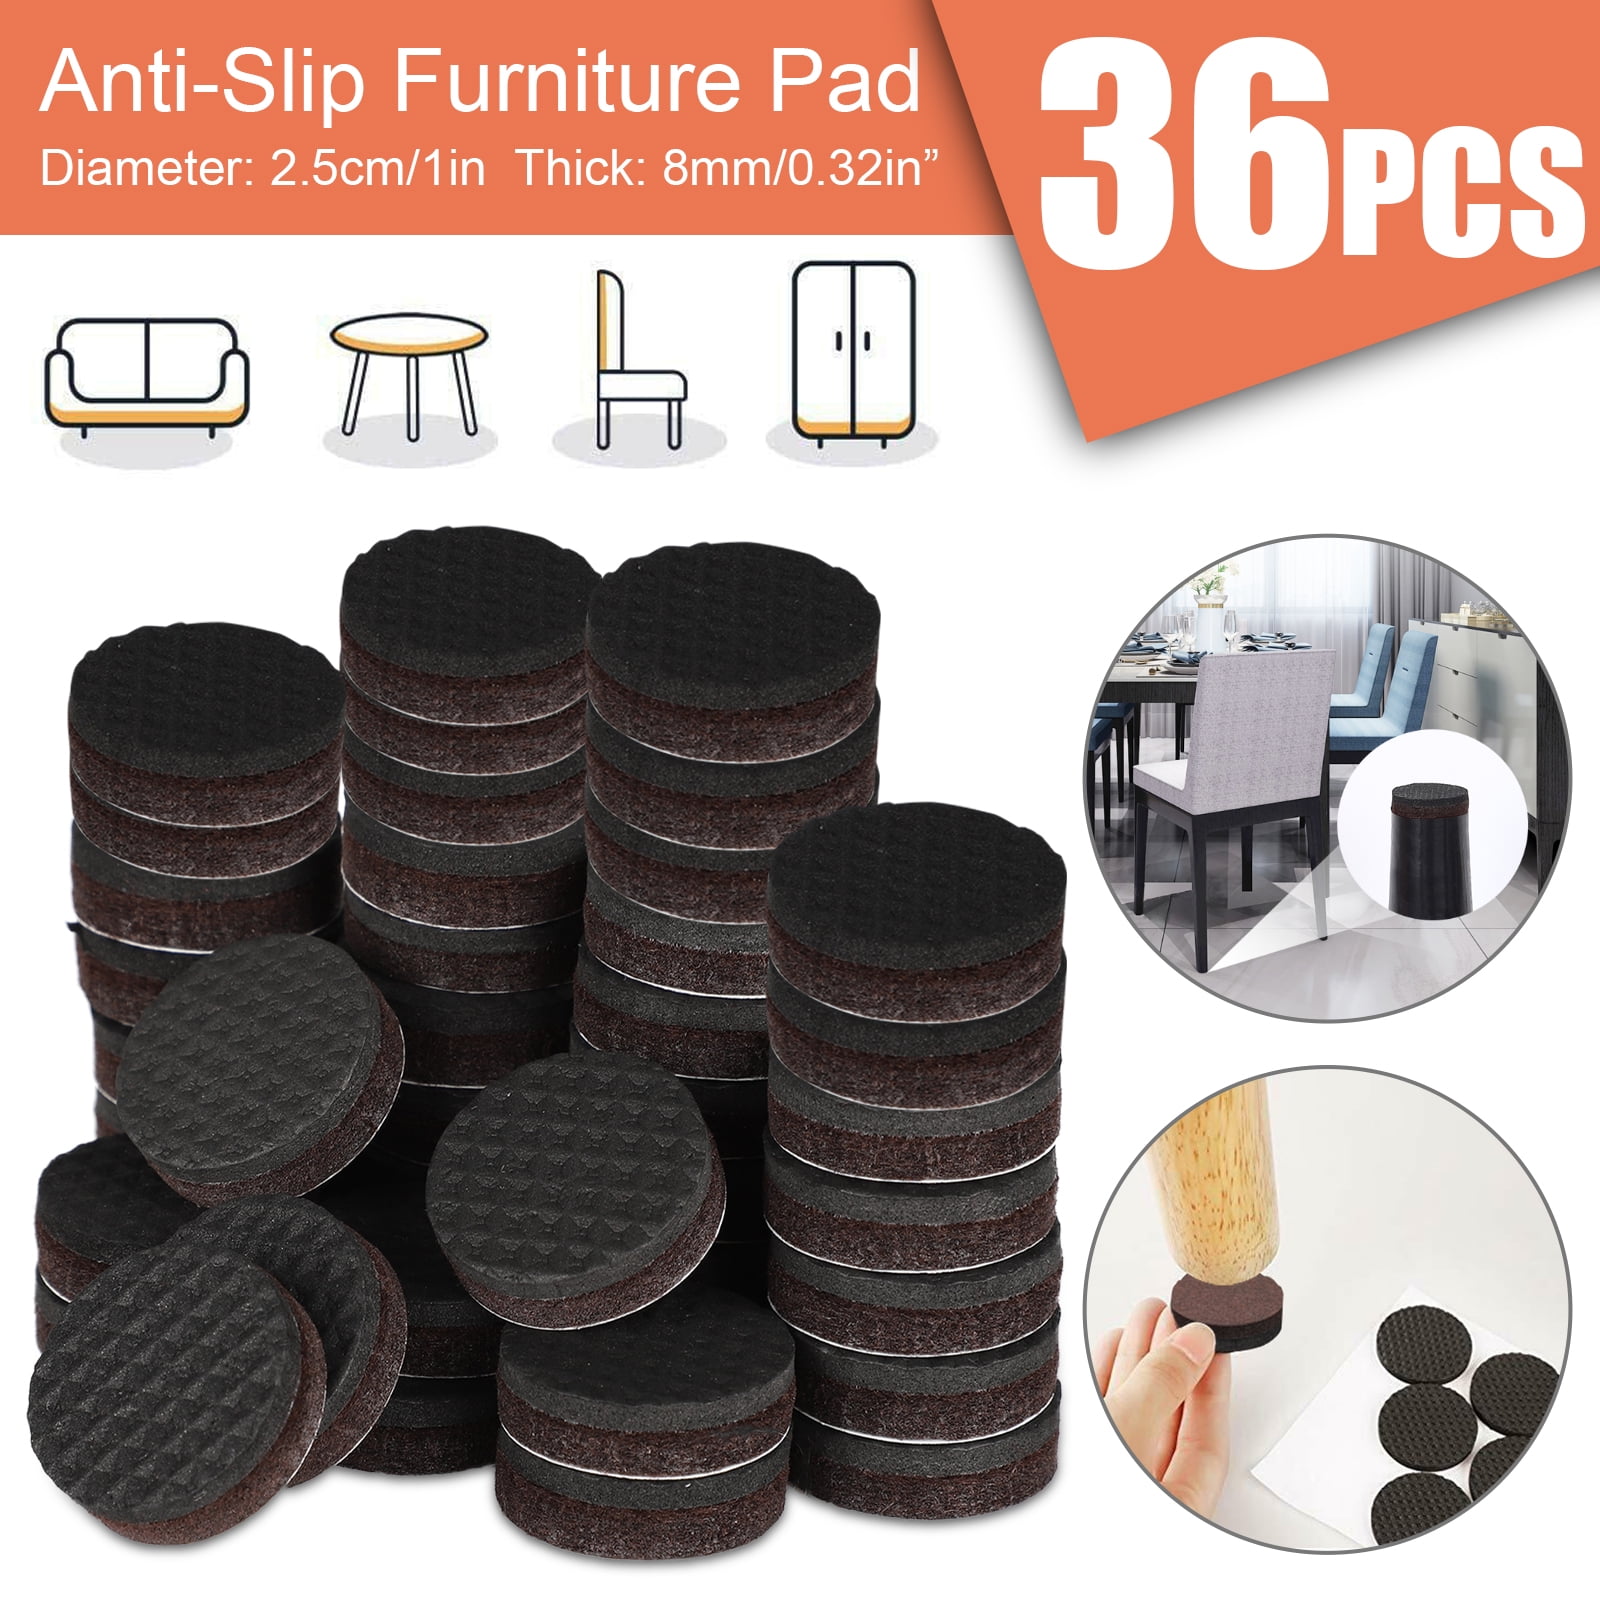 36 Non Slip Furniture Pads Self Adhesive Rubber Feet Non Skid for Furniture Legs 